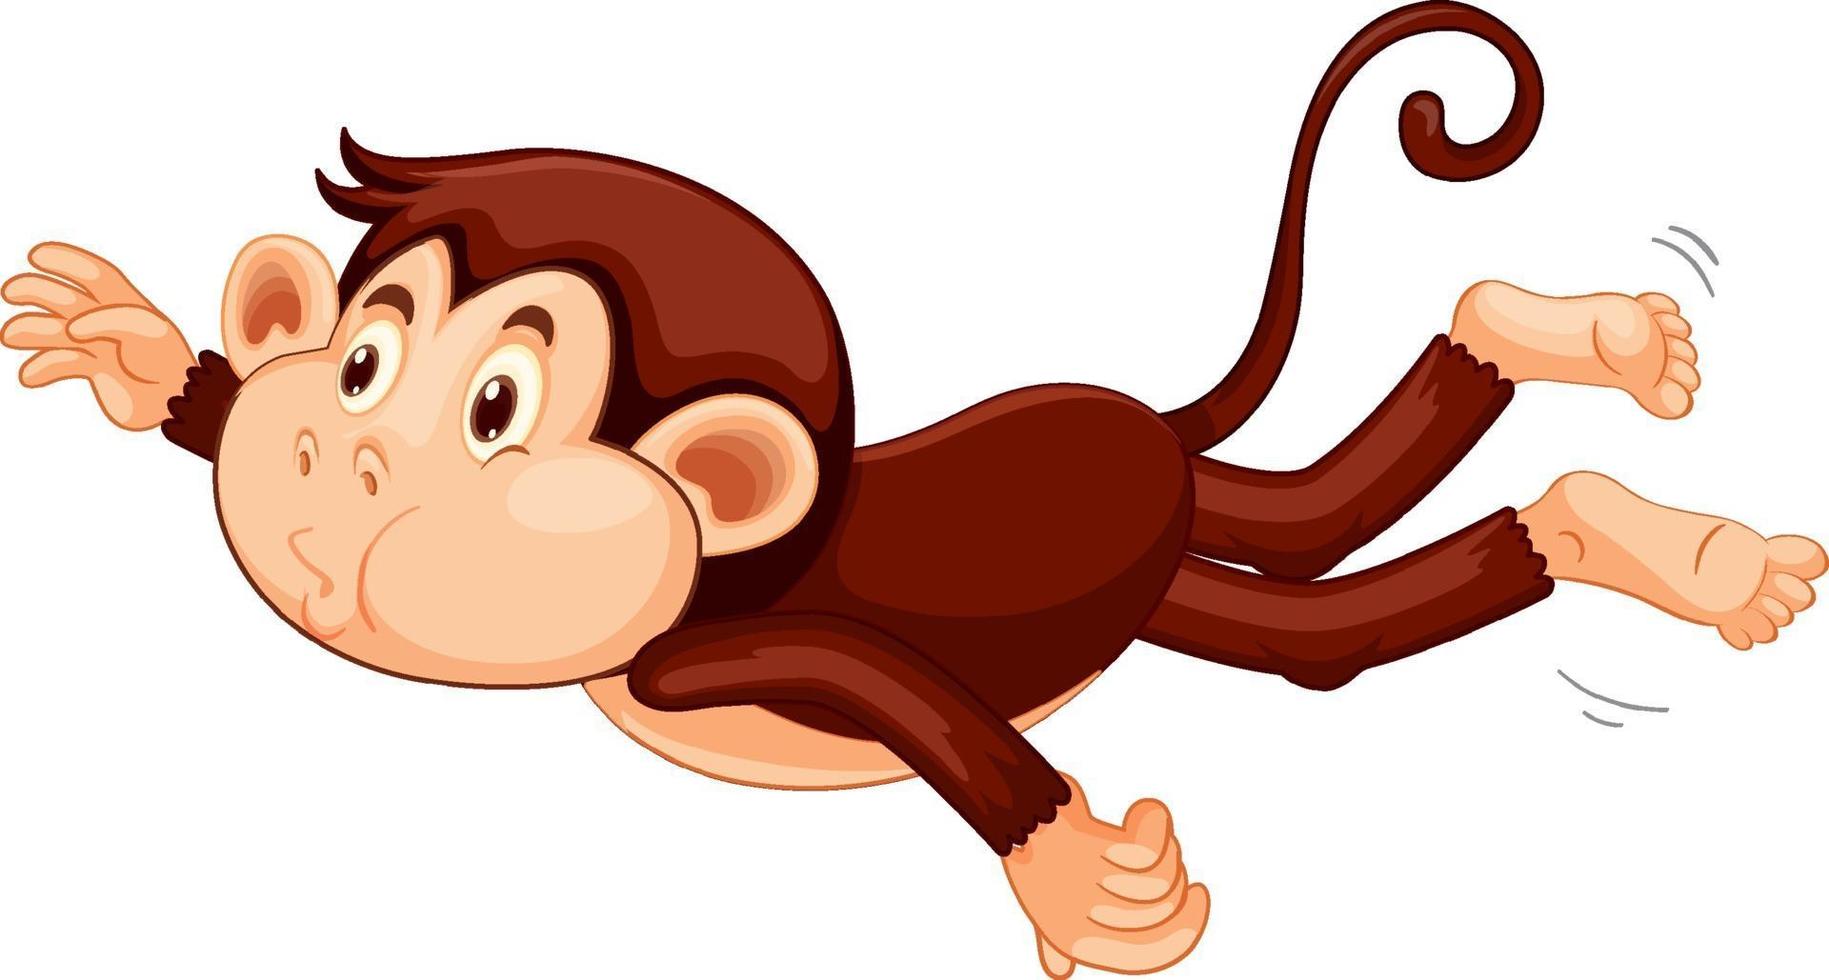 Floating monkey cartoon character vector